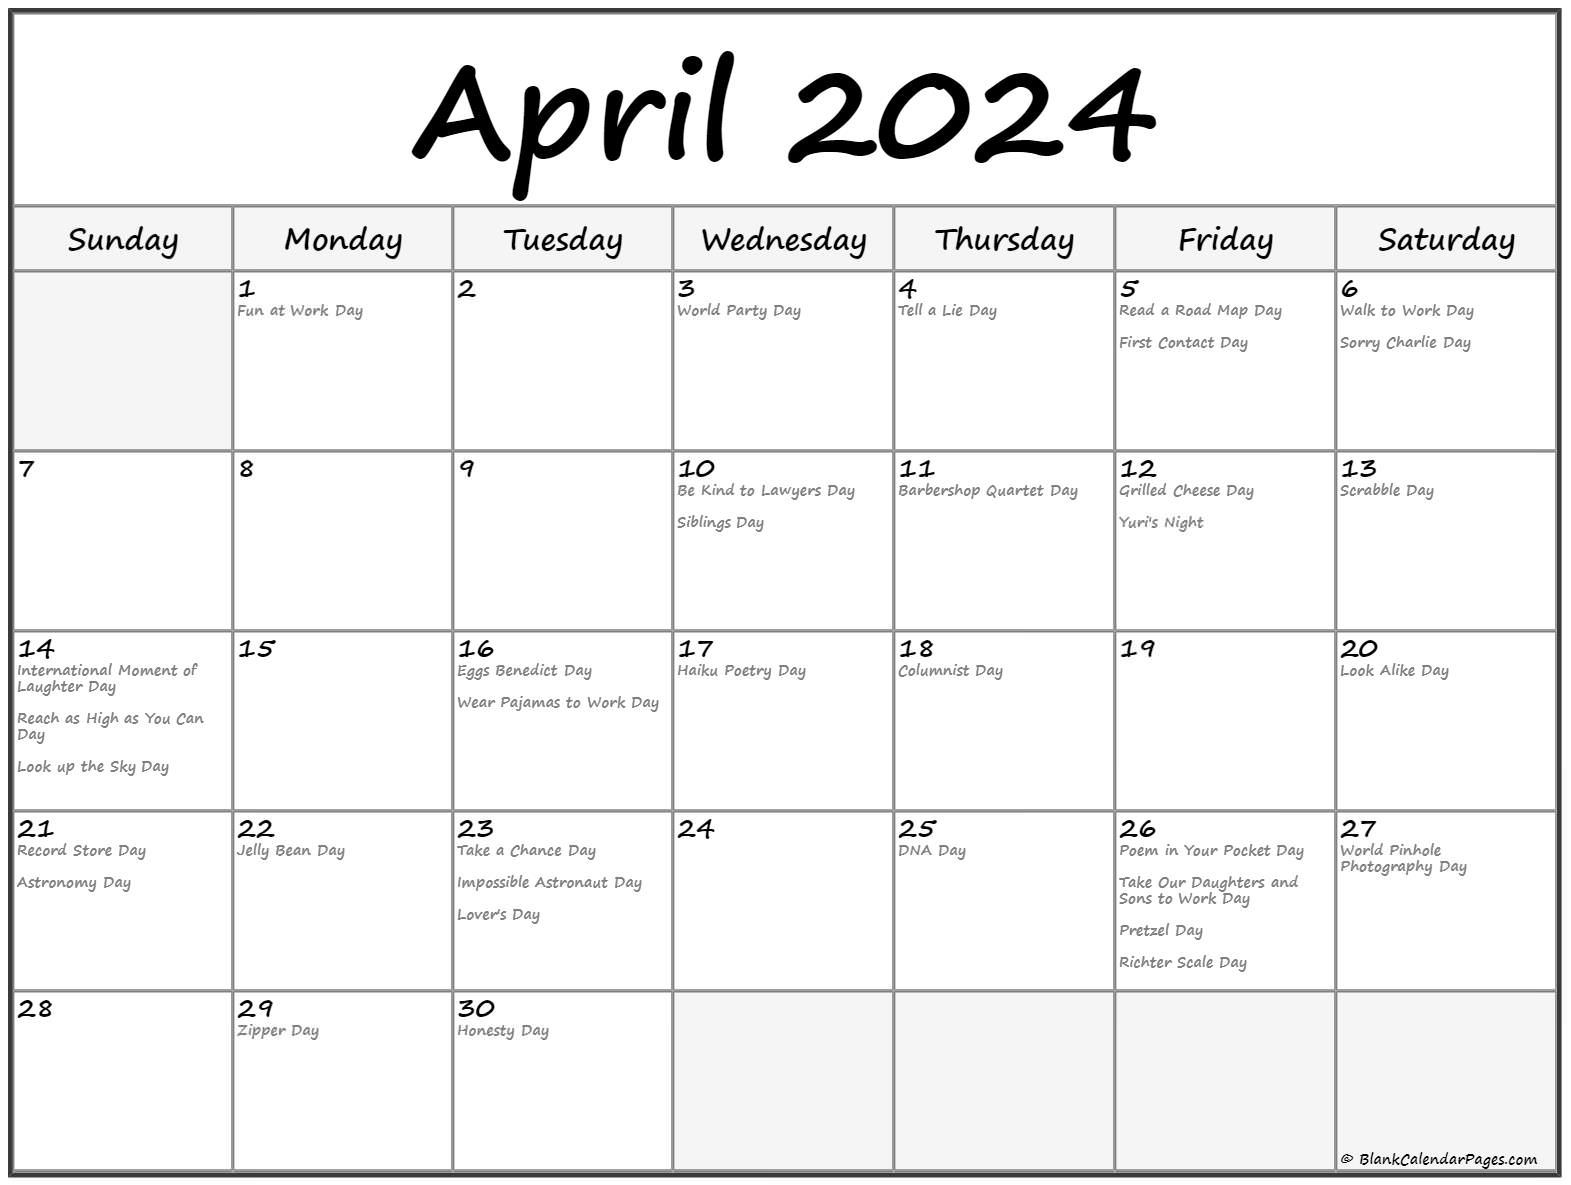 April 2024 Events Gnni Phylis